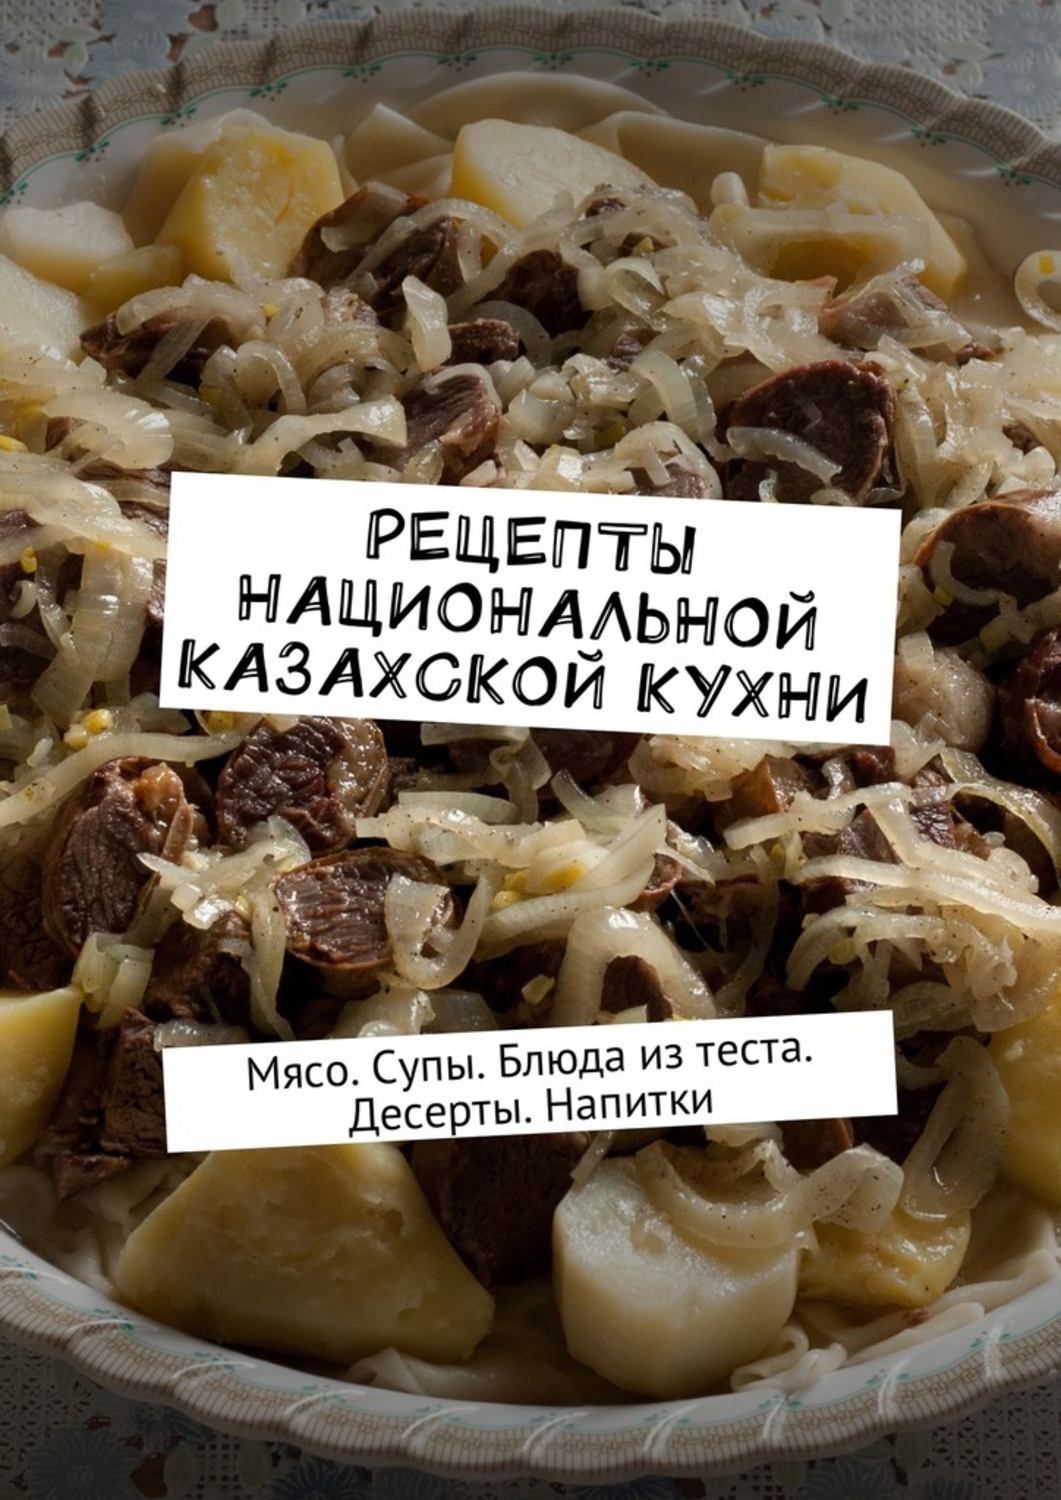 Книги с рецептами казахской кухни